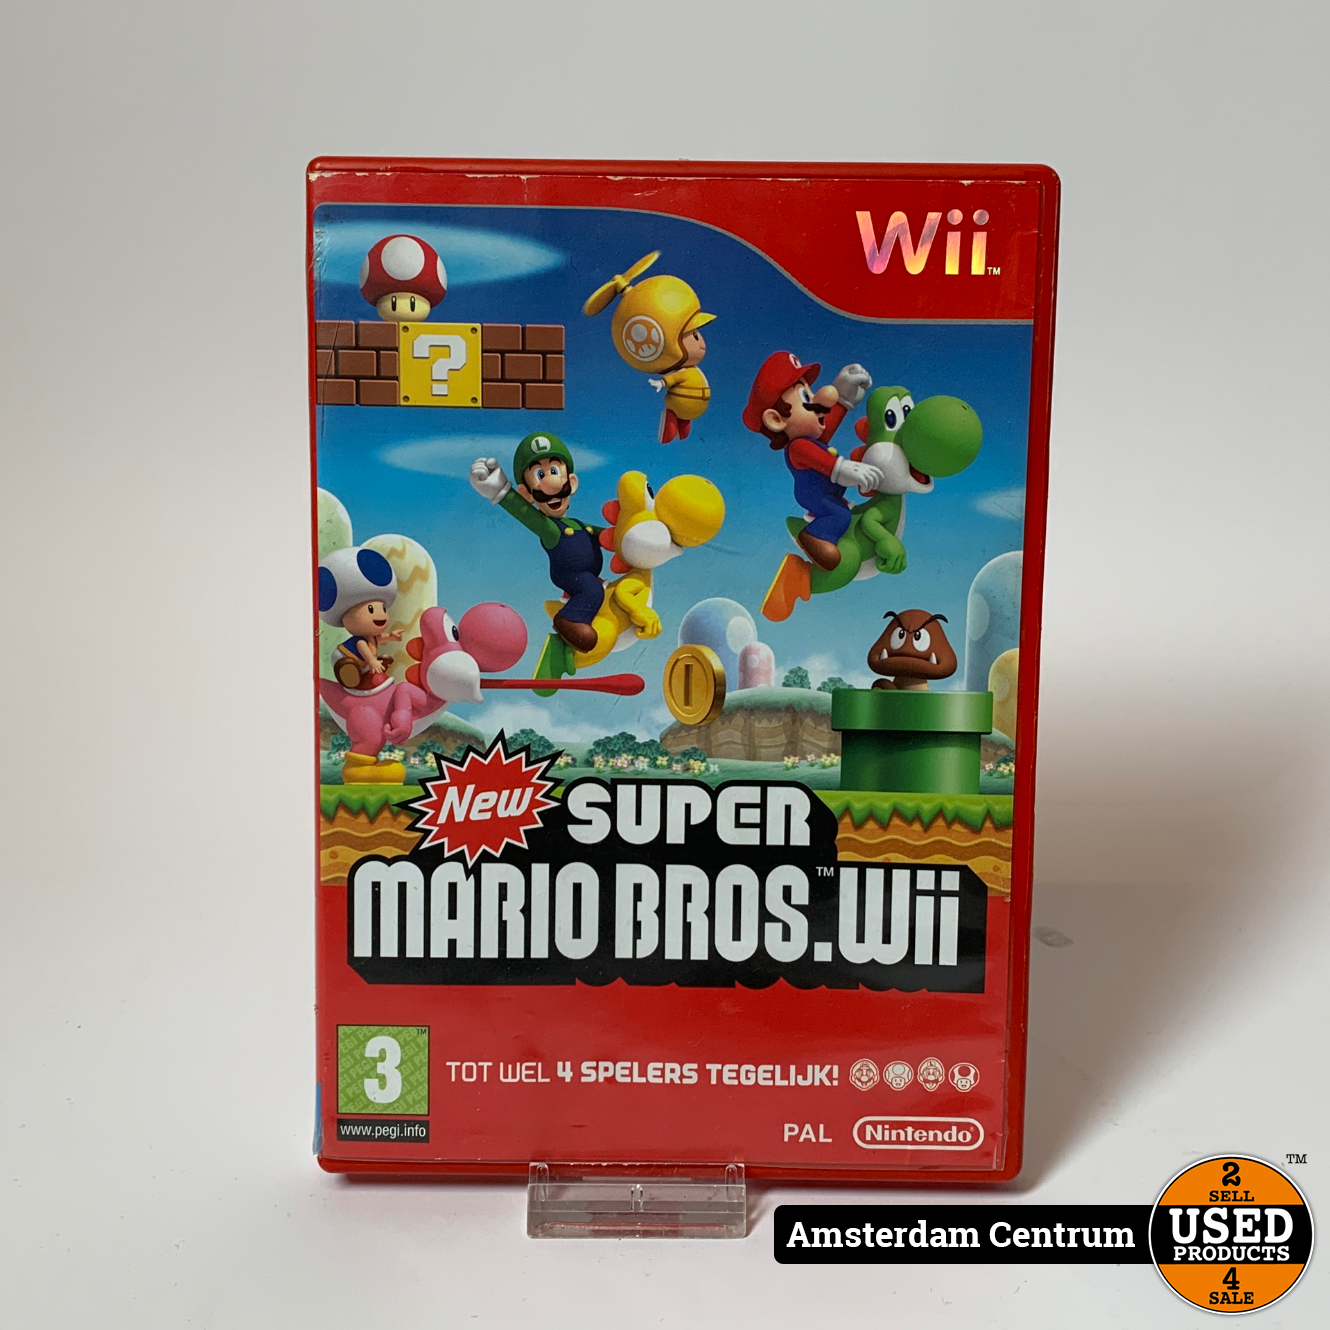 Met name galblaas mezelf Wii Game : Super Mario Bros Wii - Used Products Amsterdam Centrum